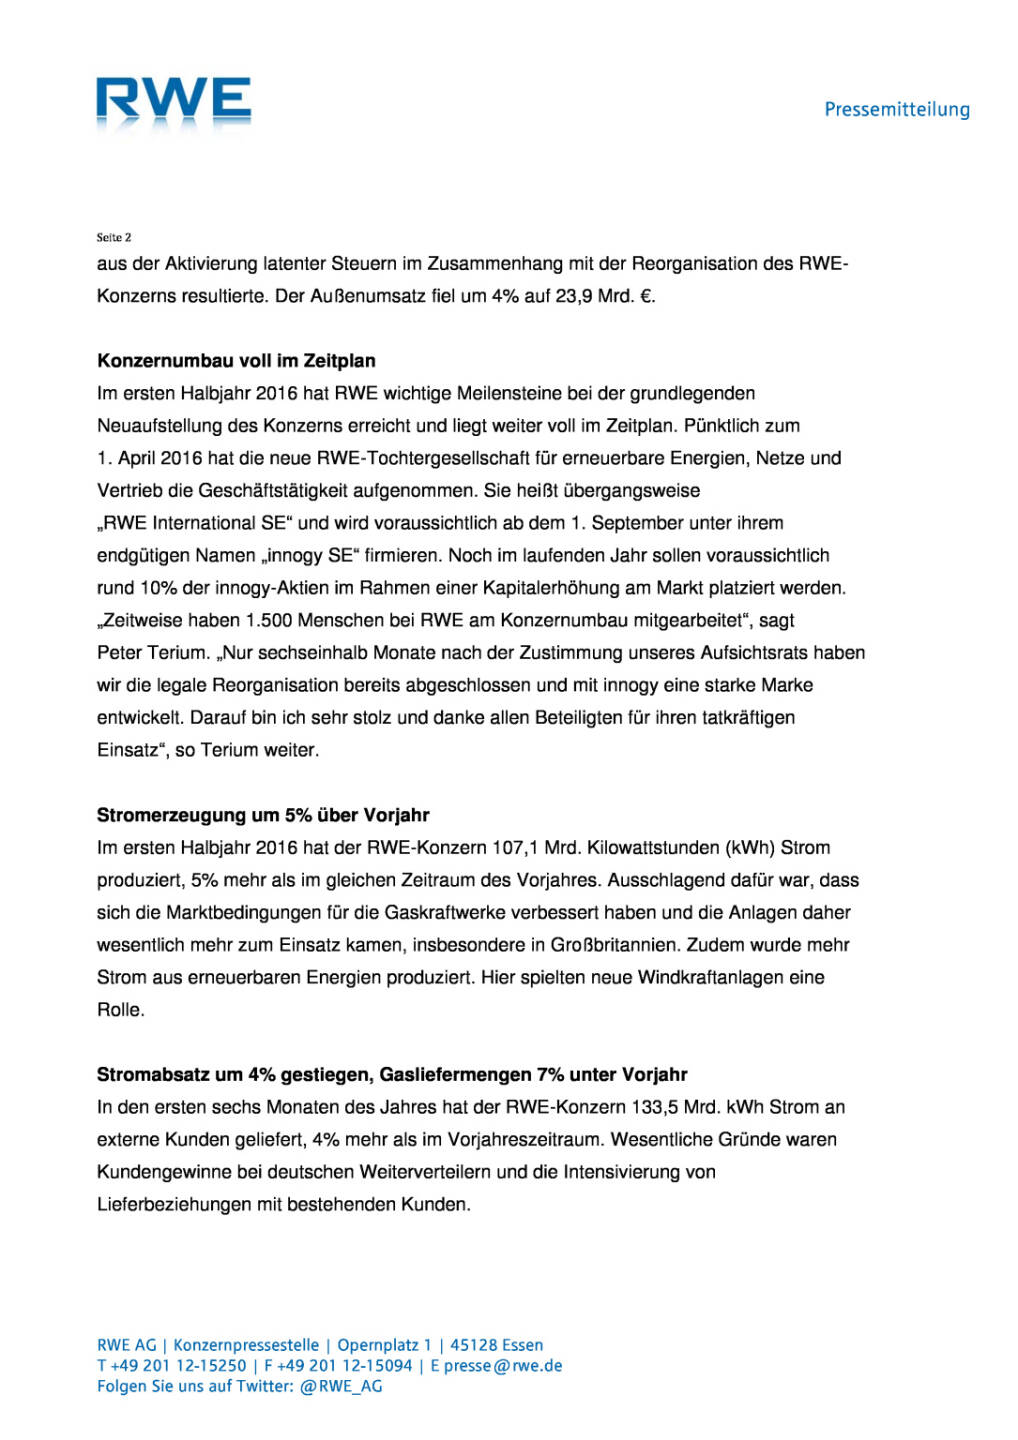 RWE: Halbjahresbilanz 2016, Seite 2/7, komplettes Dokument unter http://boerse-social.com/static/uploads/file_1605_rwe_halbjahresbilanz_2016.pdf